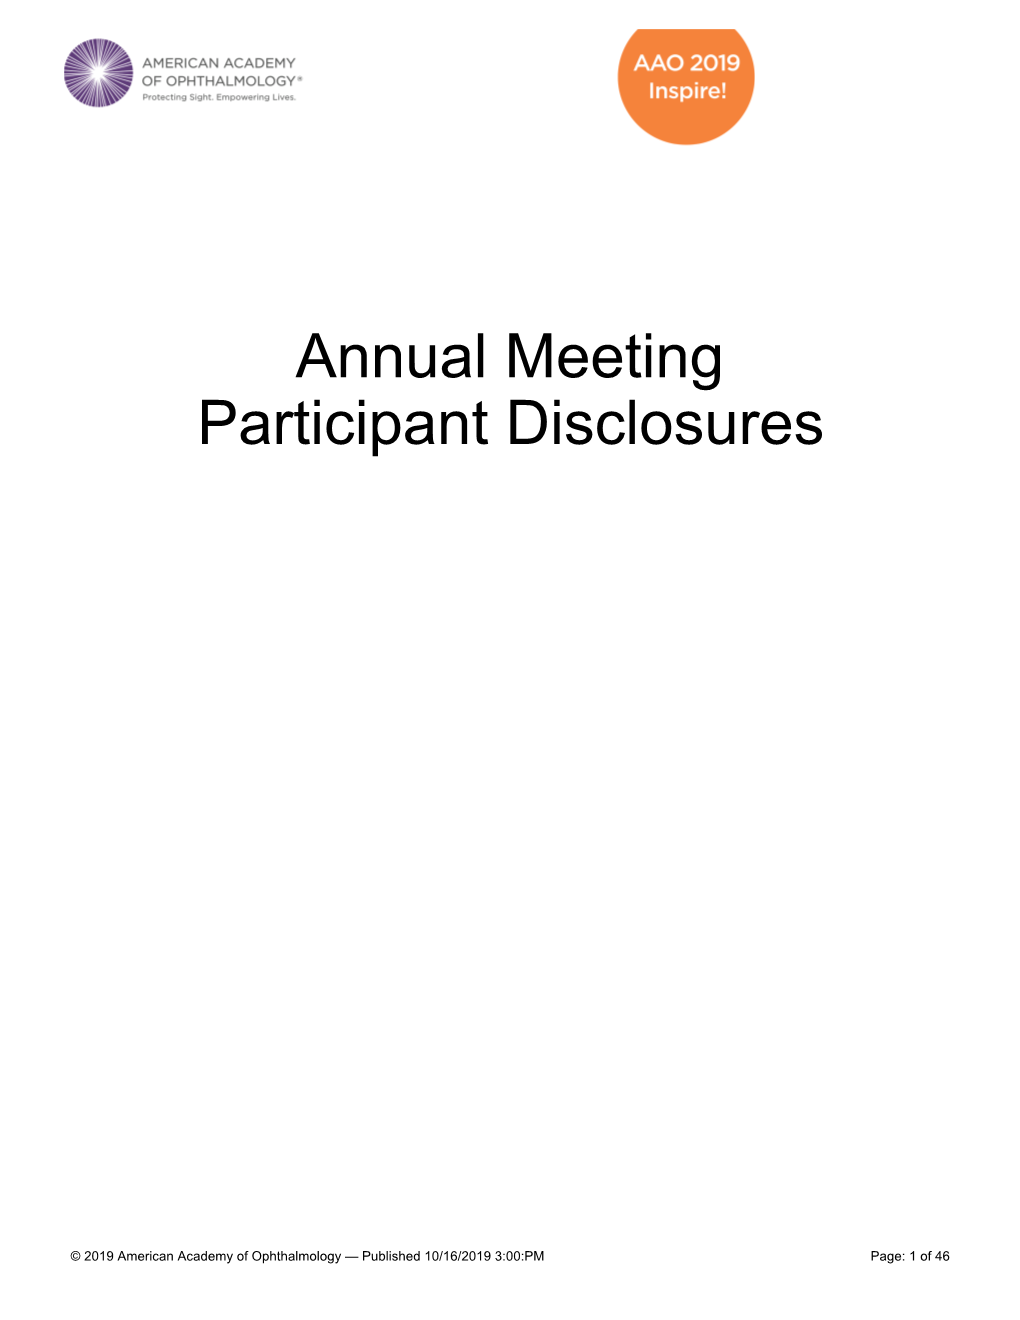 Presenter Financial Disclosures for AAO 2019